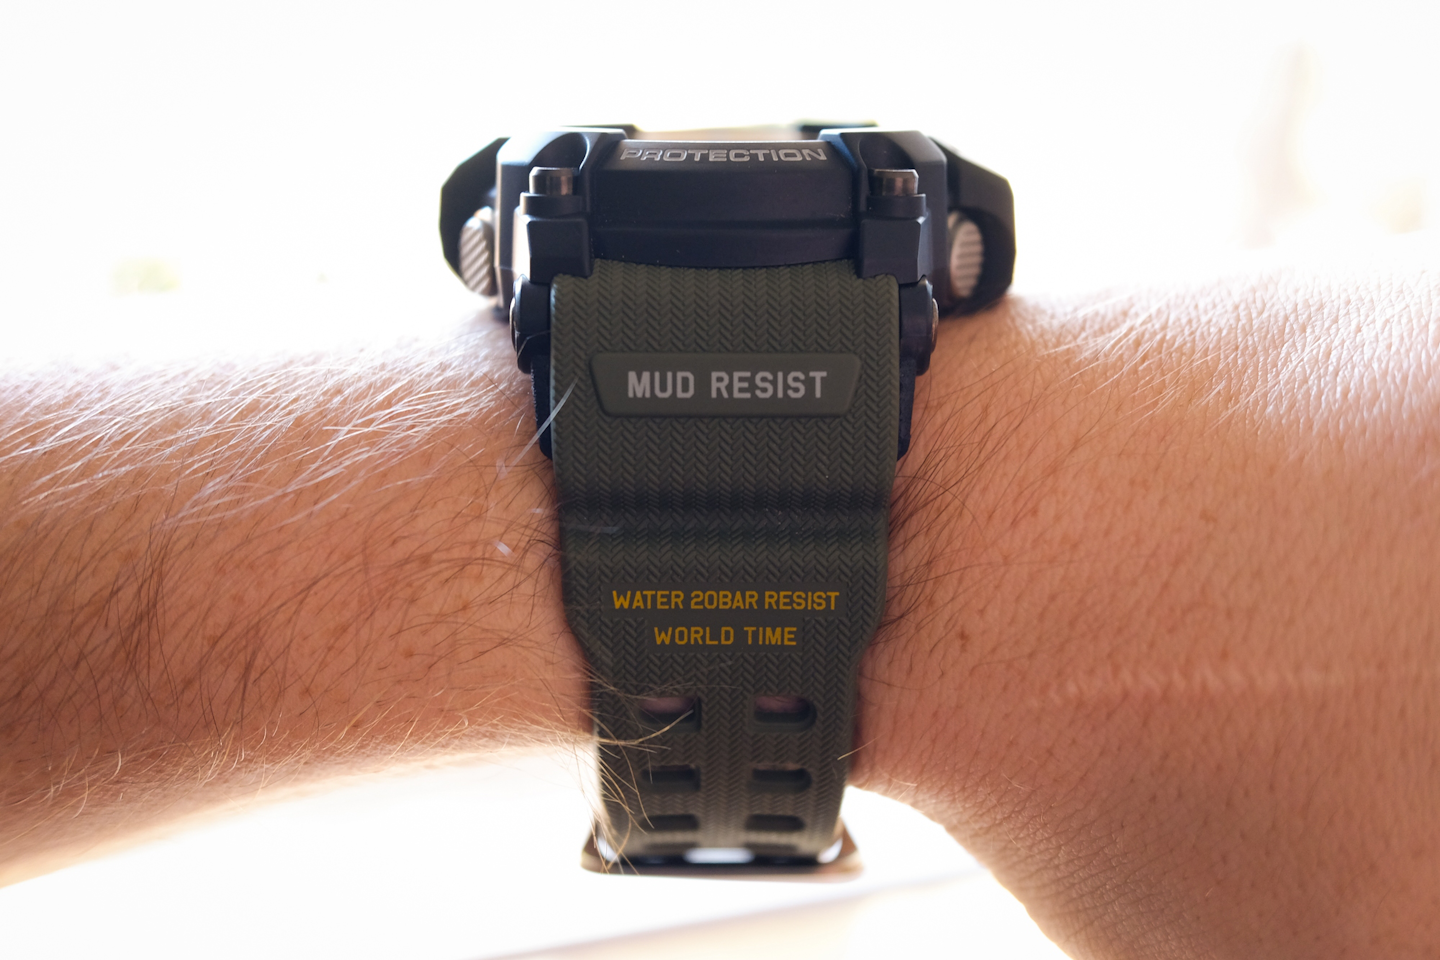 Review Casio S Mudmaster Gg 1000 A G Shock Watch Designed To Survive Construction Trades Work Equipment World